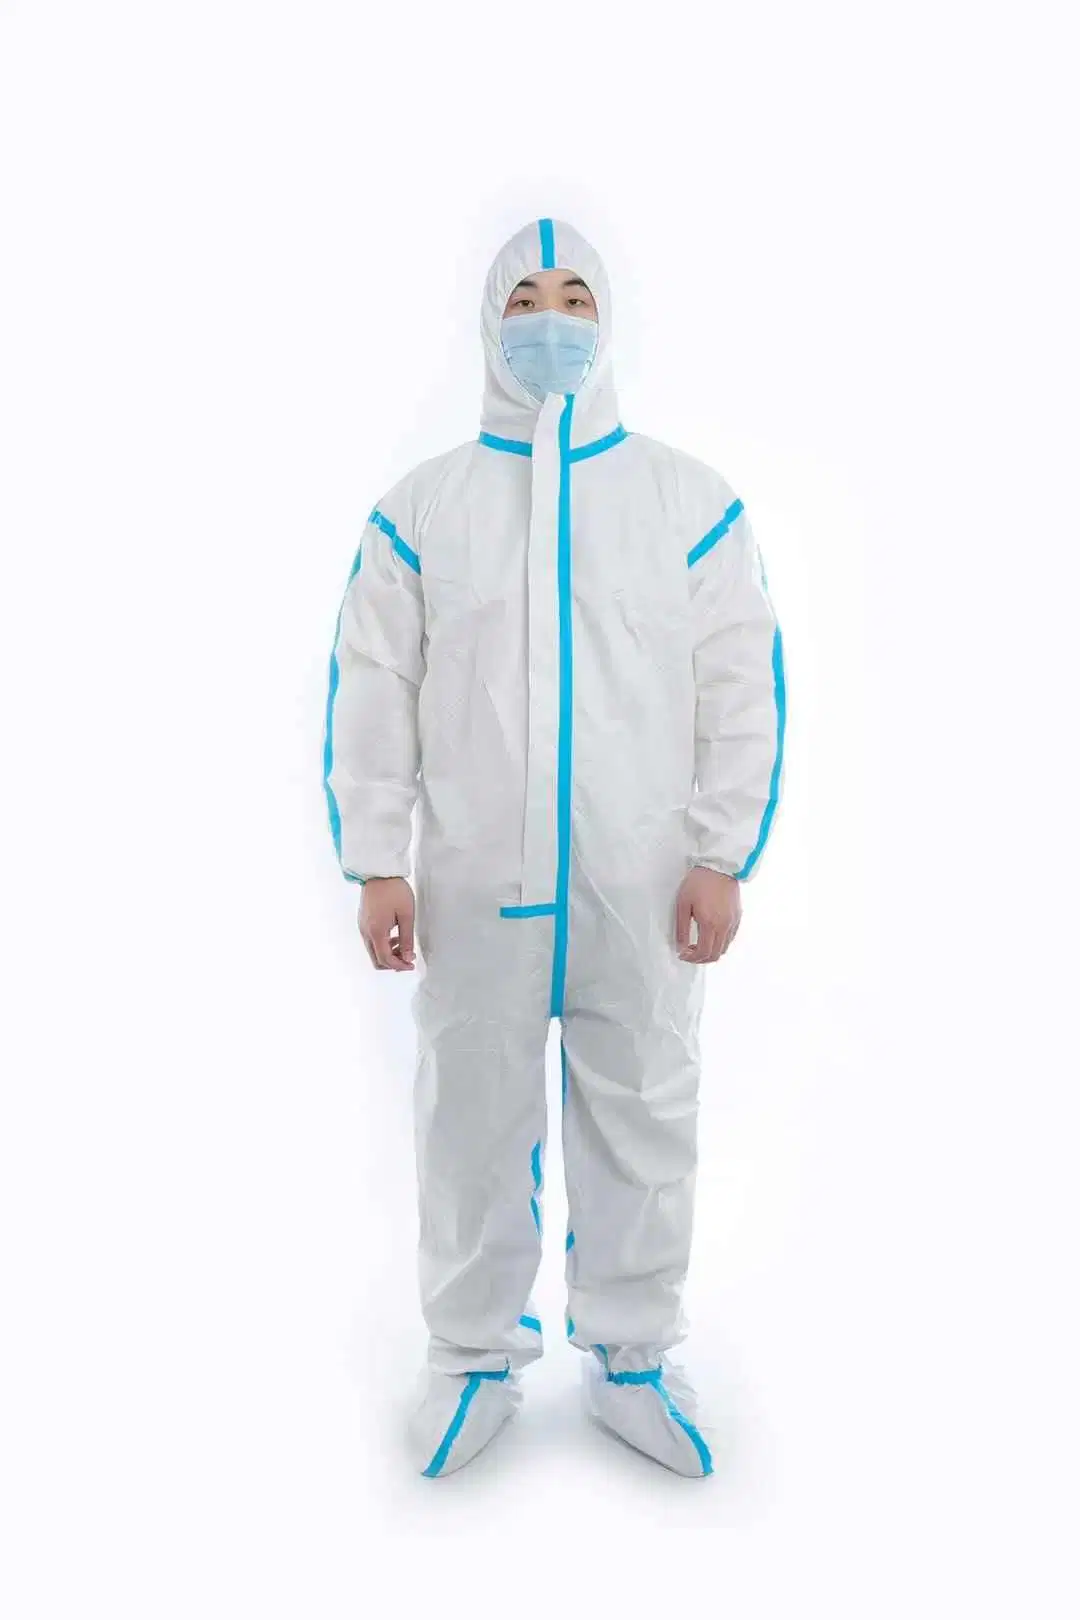 Medical Protective Clothing Safety Environmental Protection Bacteriosis